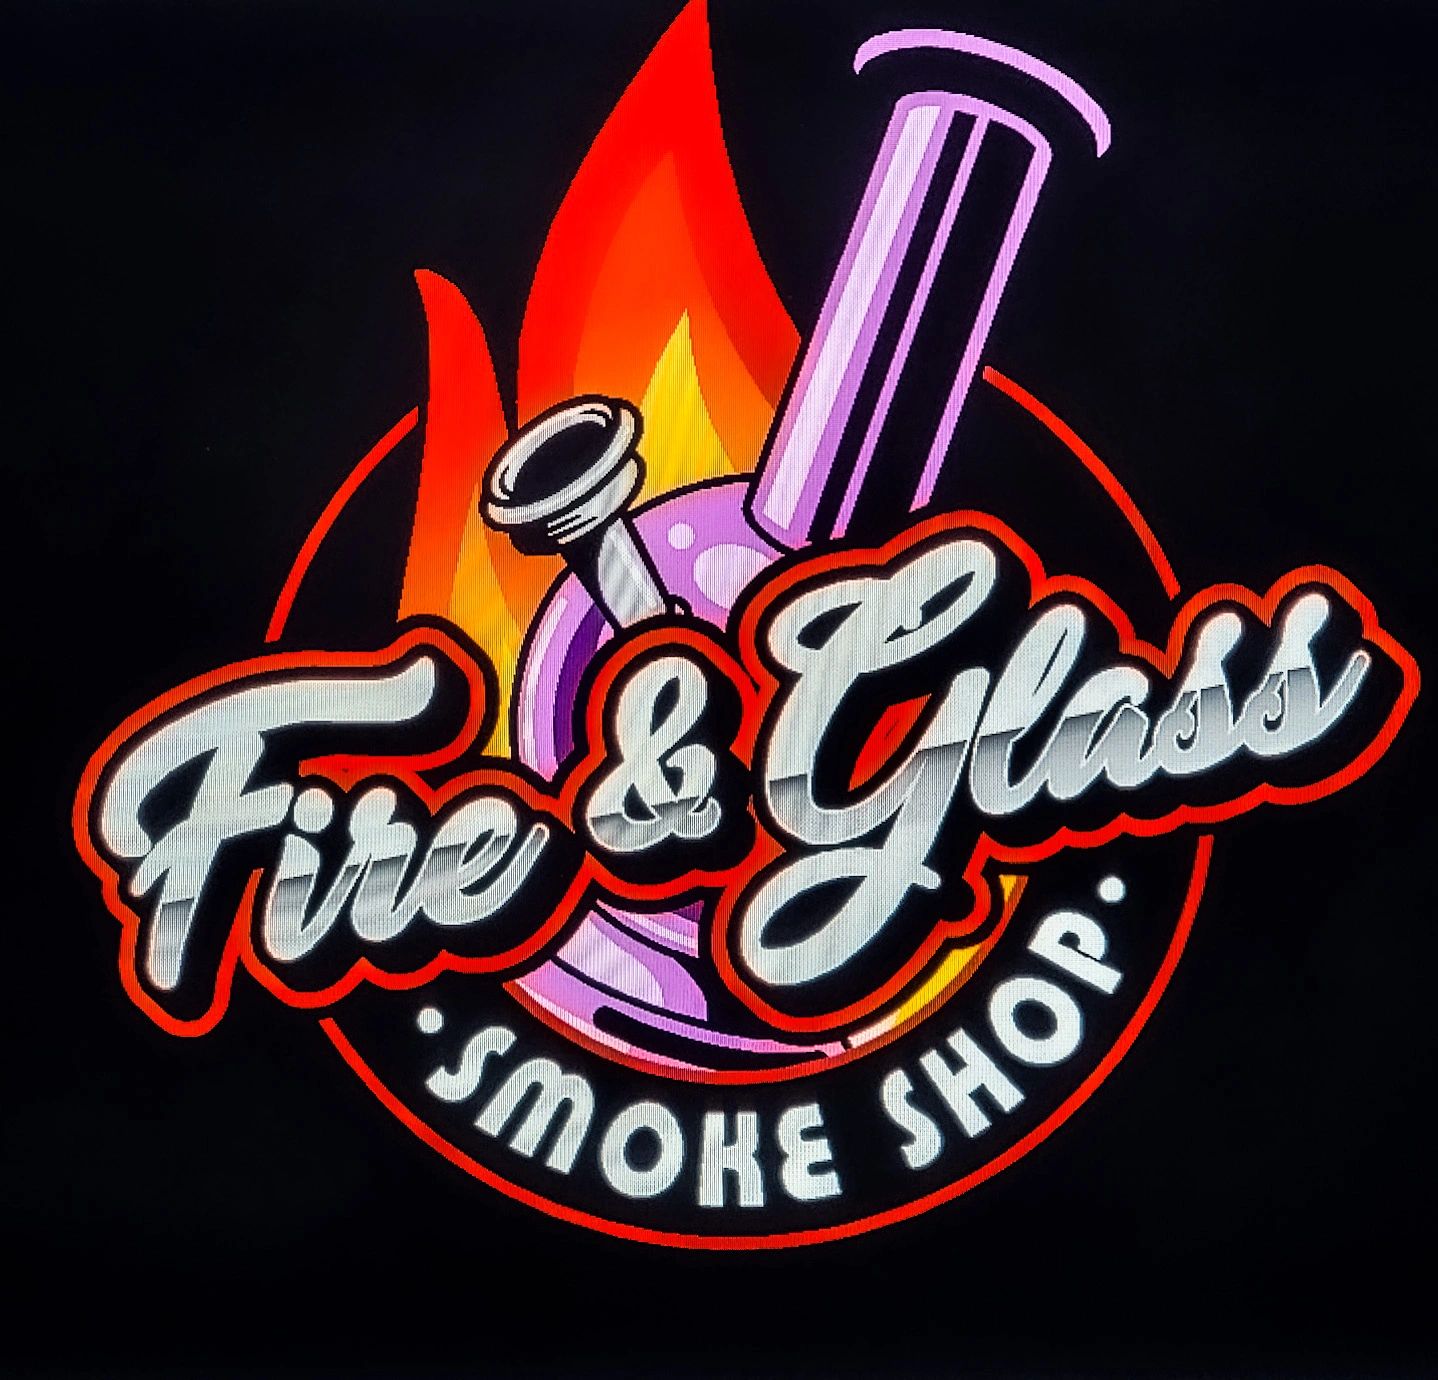 Fire and Glass Smoke Shop - Head Shop - Rome, New York